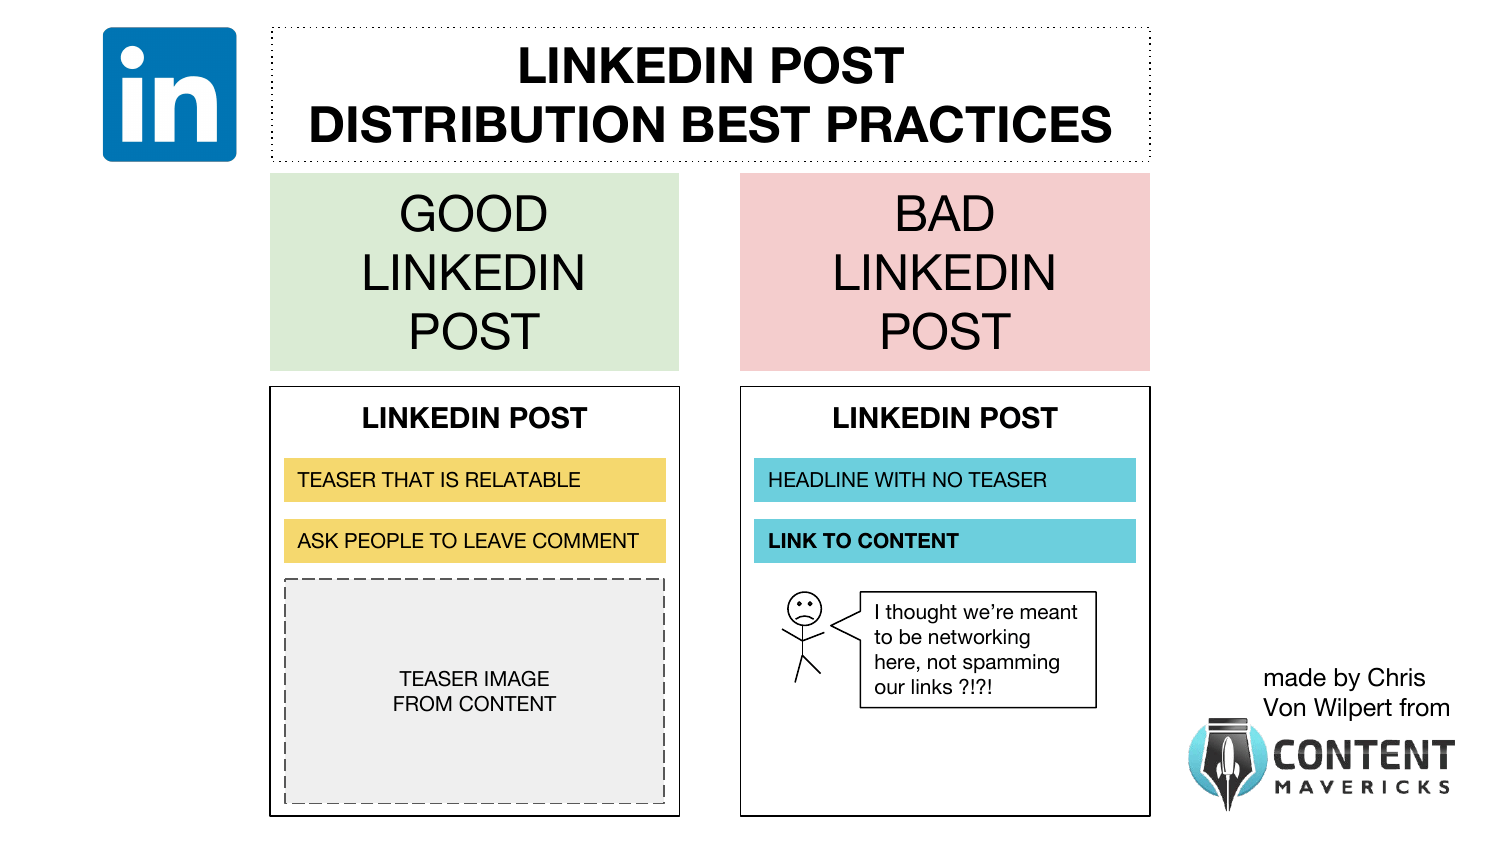 linkedin post content distribution best practices image